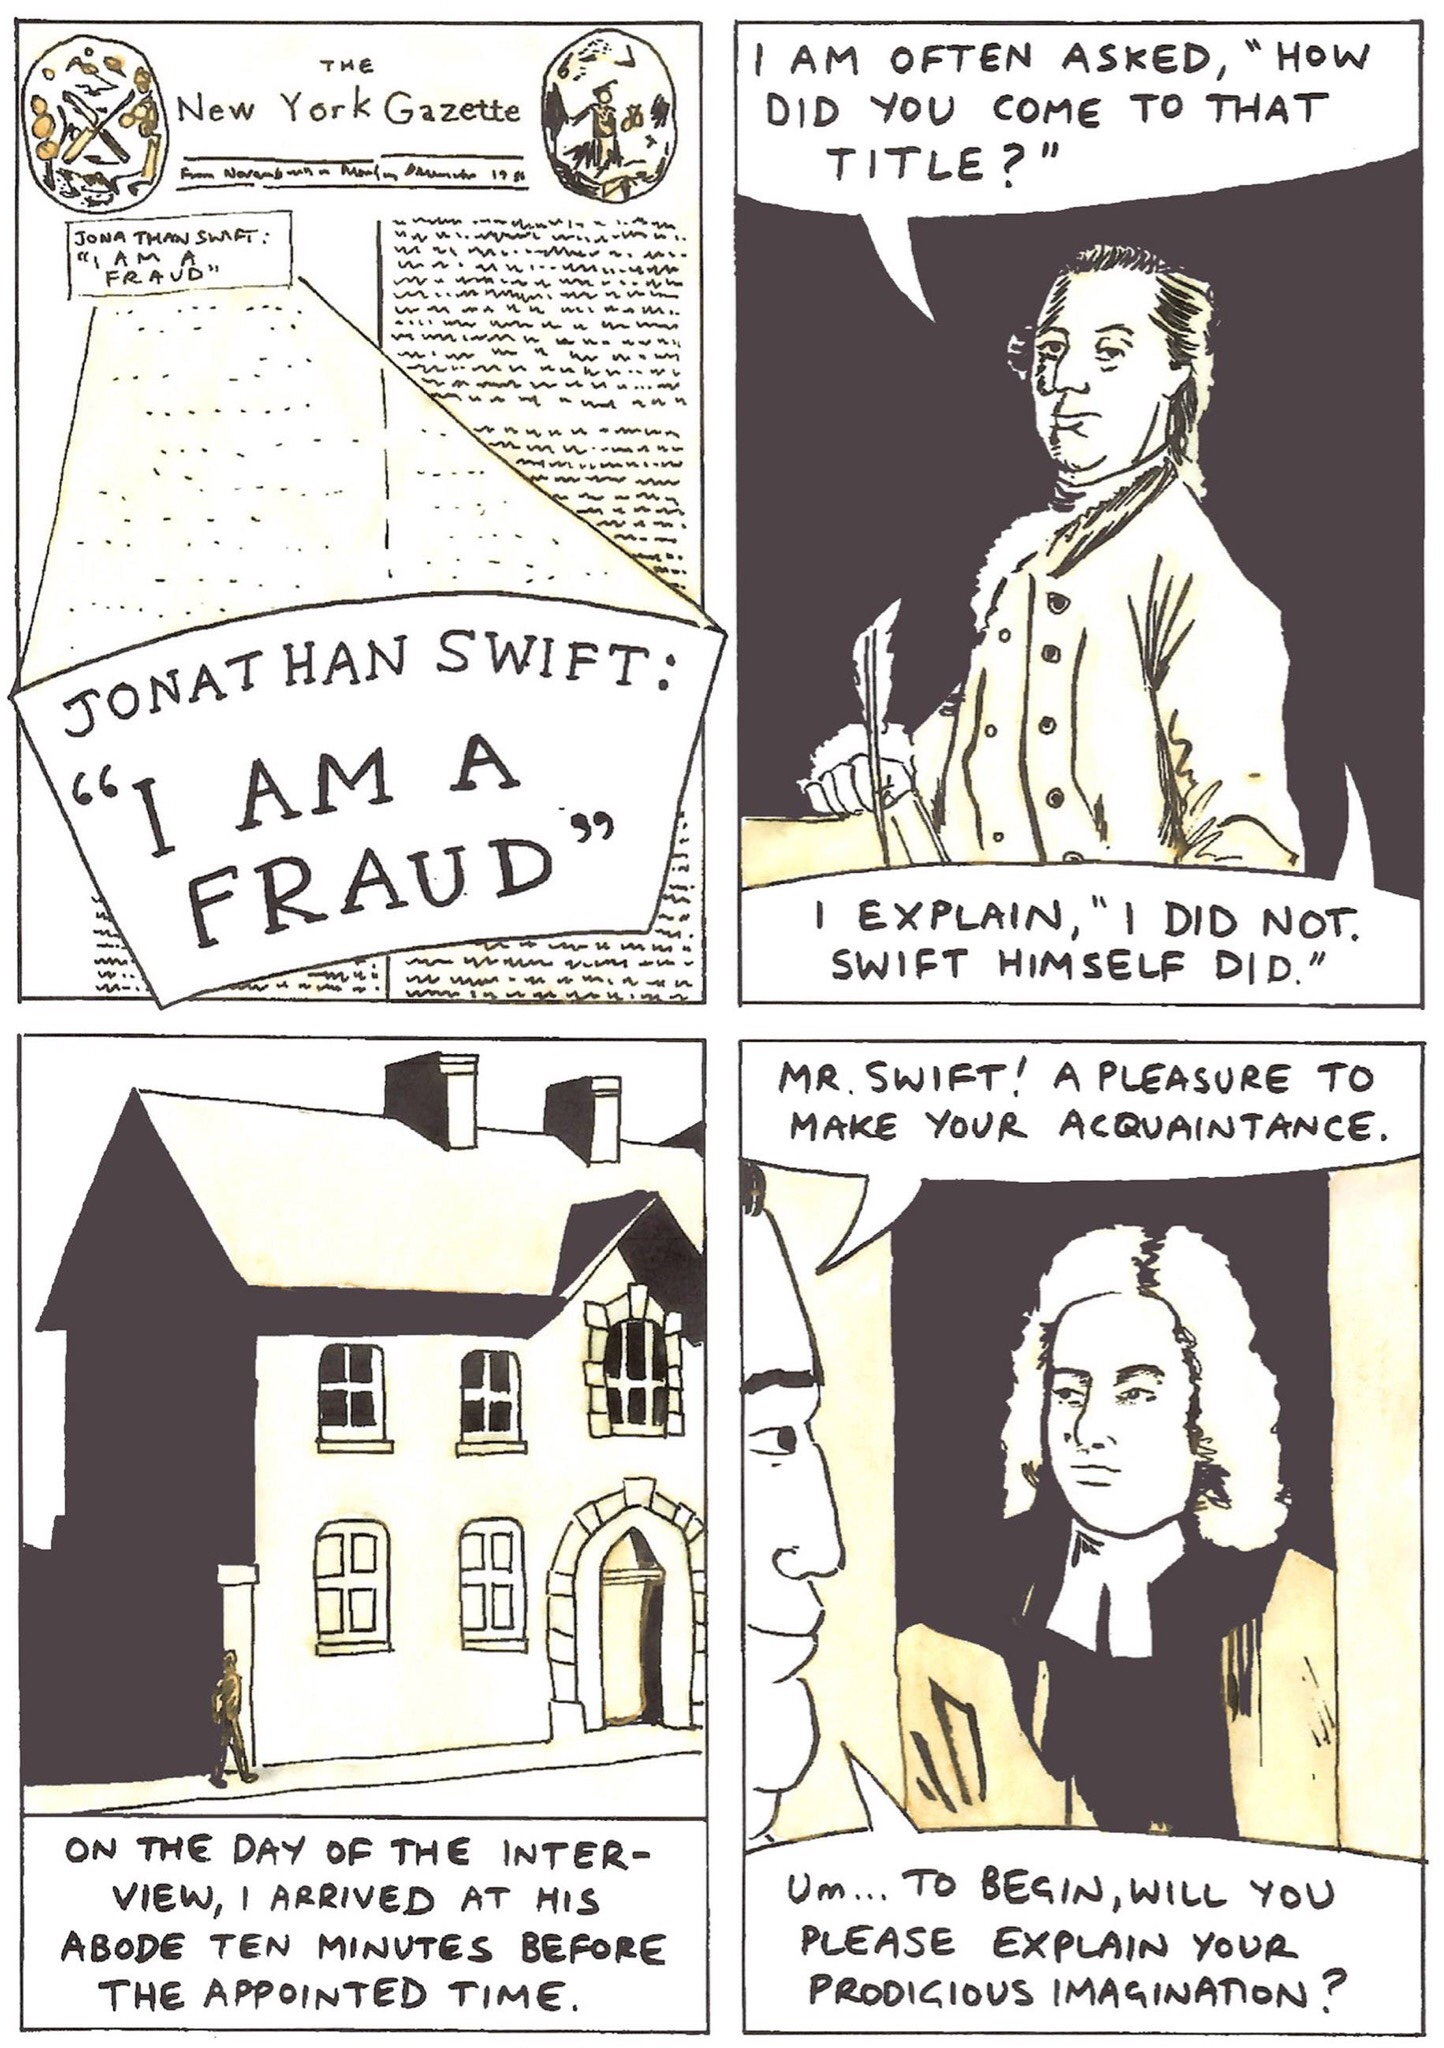 Jonathan Swift: I am a Fraud